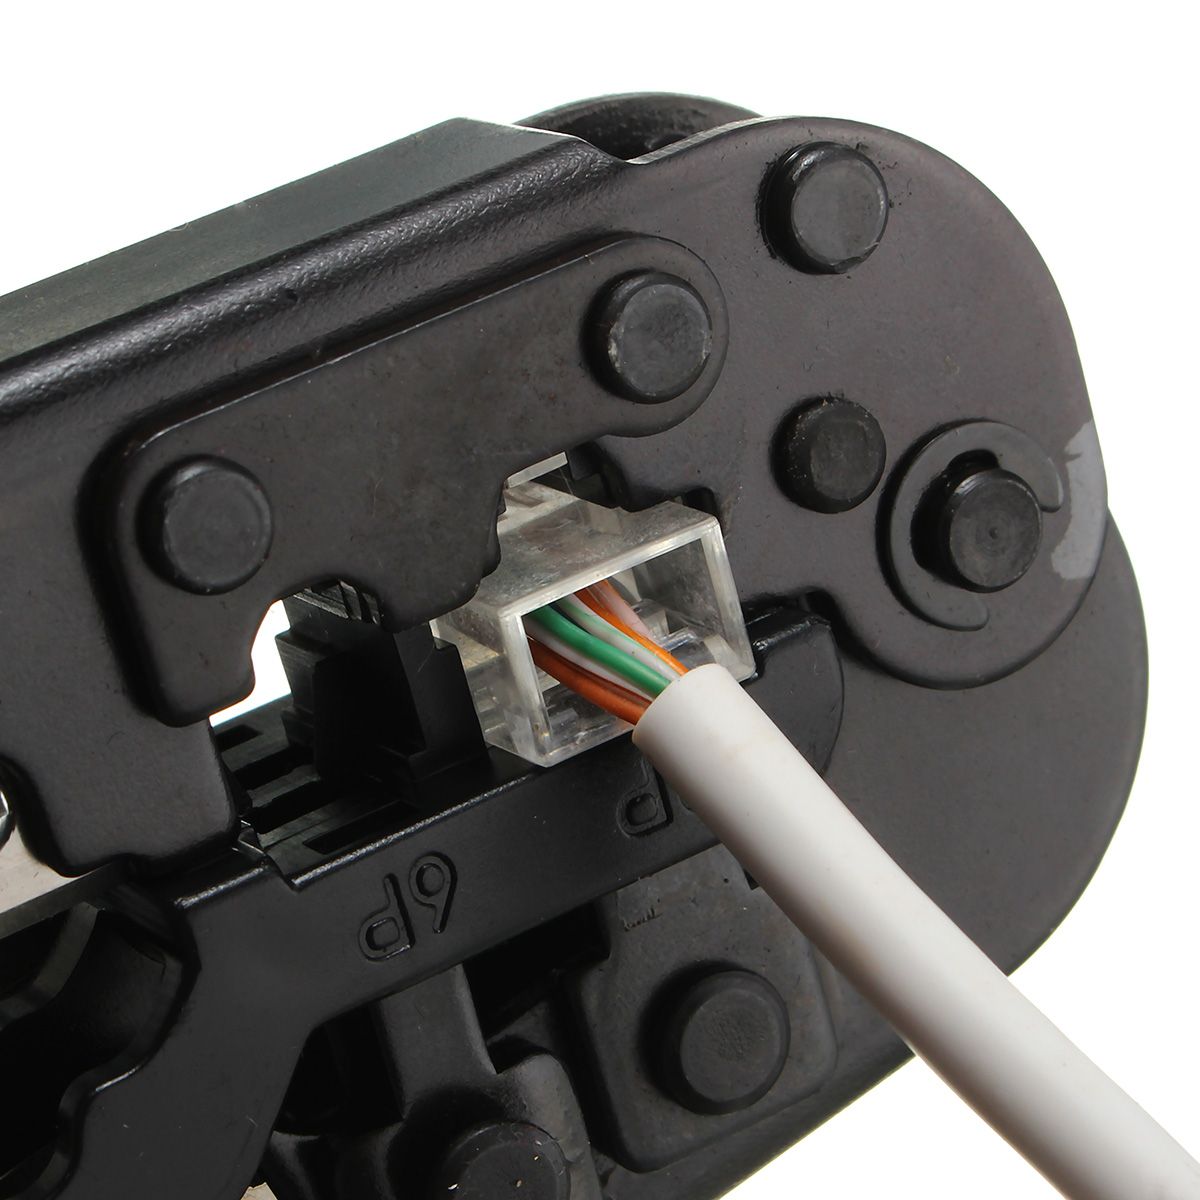 Professional-Network-Wire-Stripper-Pliers-Crimper-Tool-for-CAT5e6-RJ451211-22-1143387